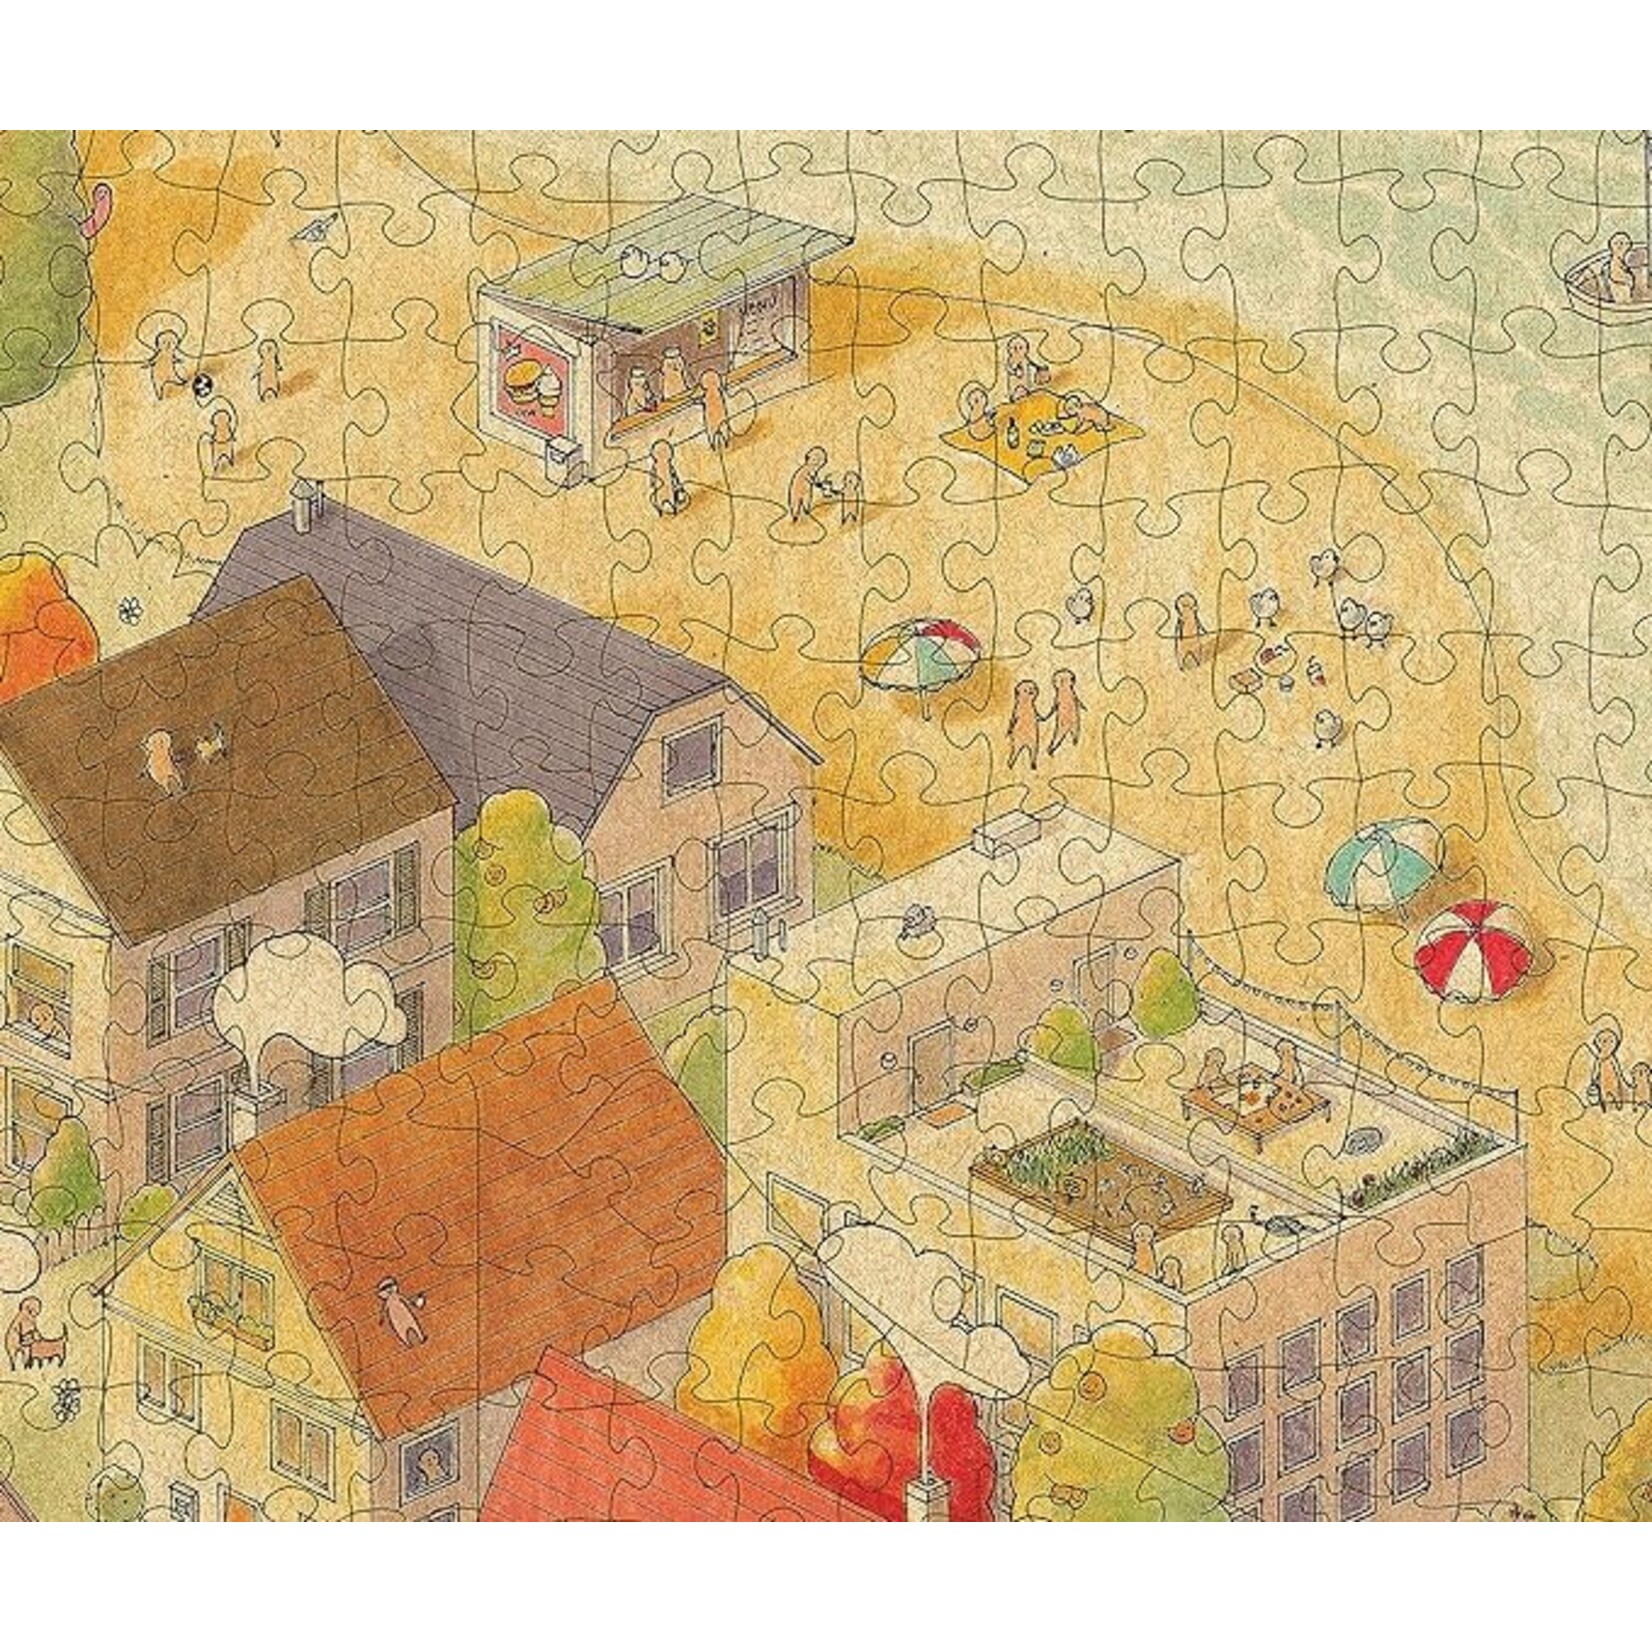 Magic Puzzle Company The Sunny City, 1000-Piece Jigsaw Puzzle with Bonus Logic & Illusions